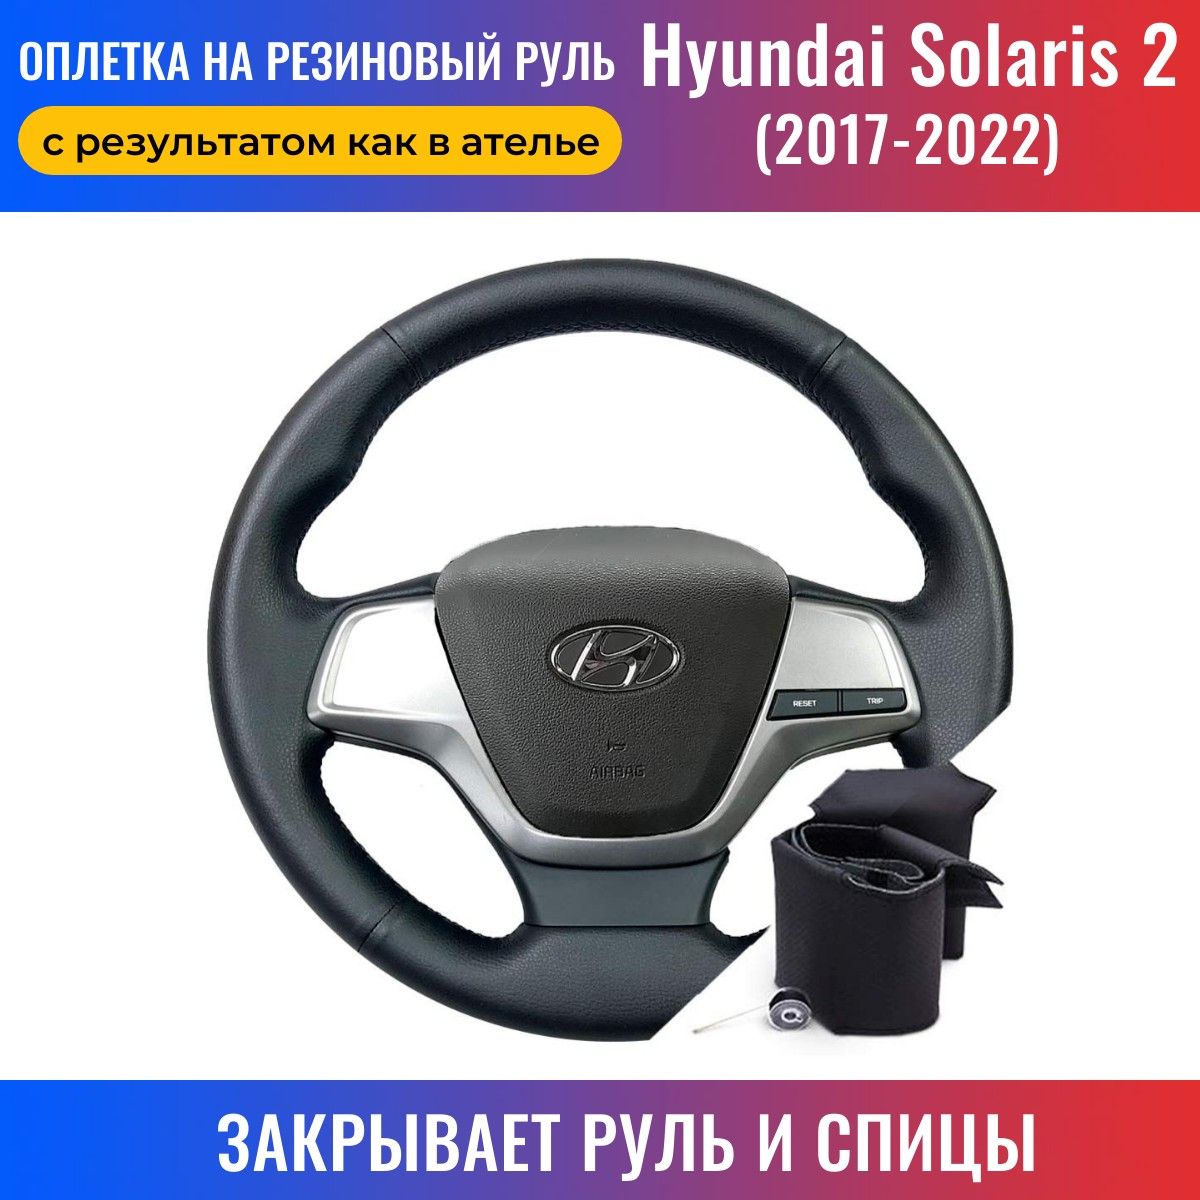 Руль на Hyundai Solaris - Hyundai Solaris клуб